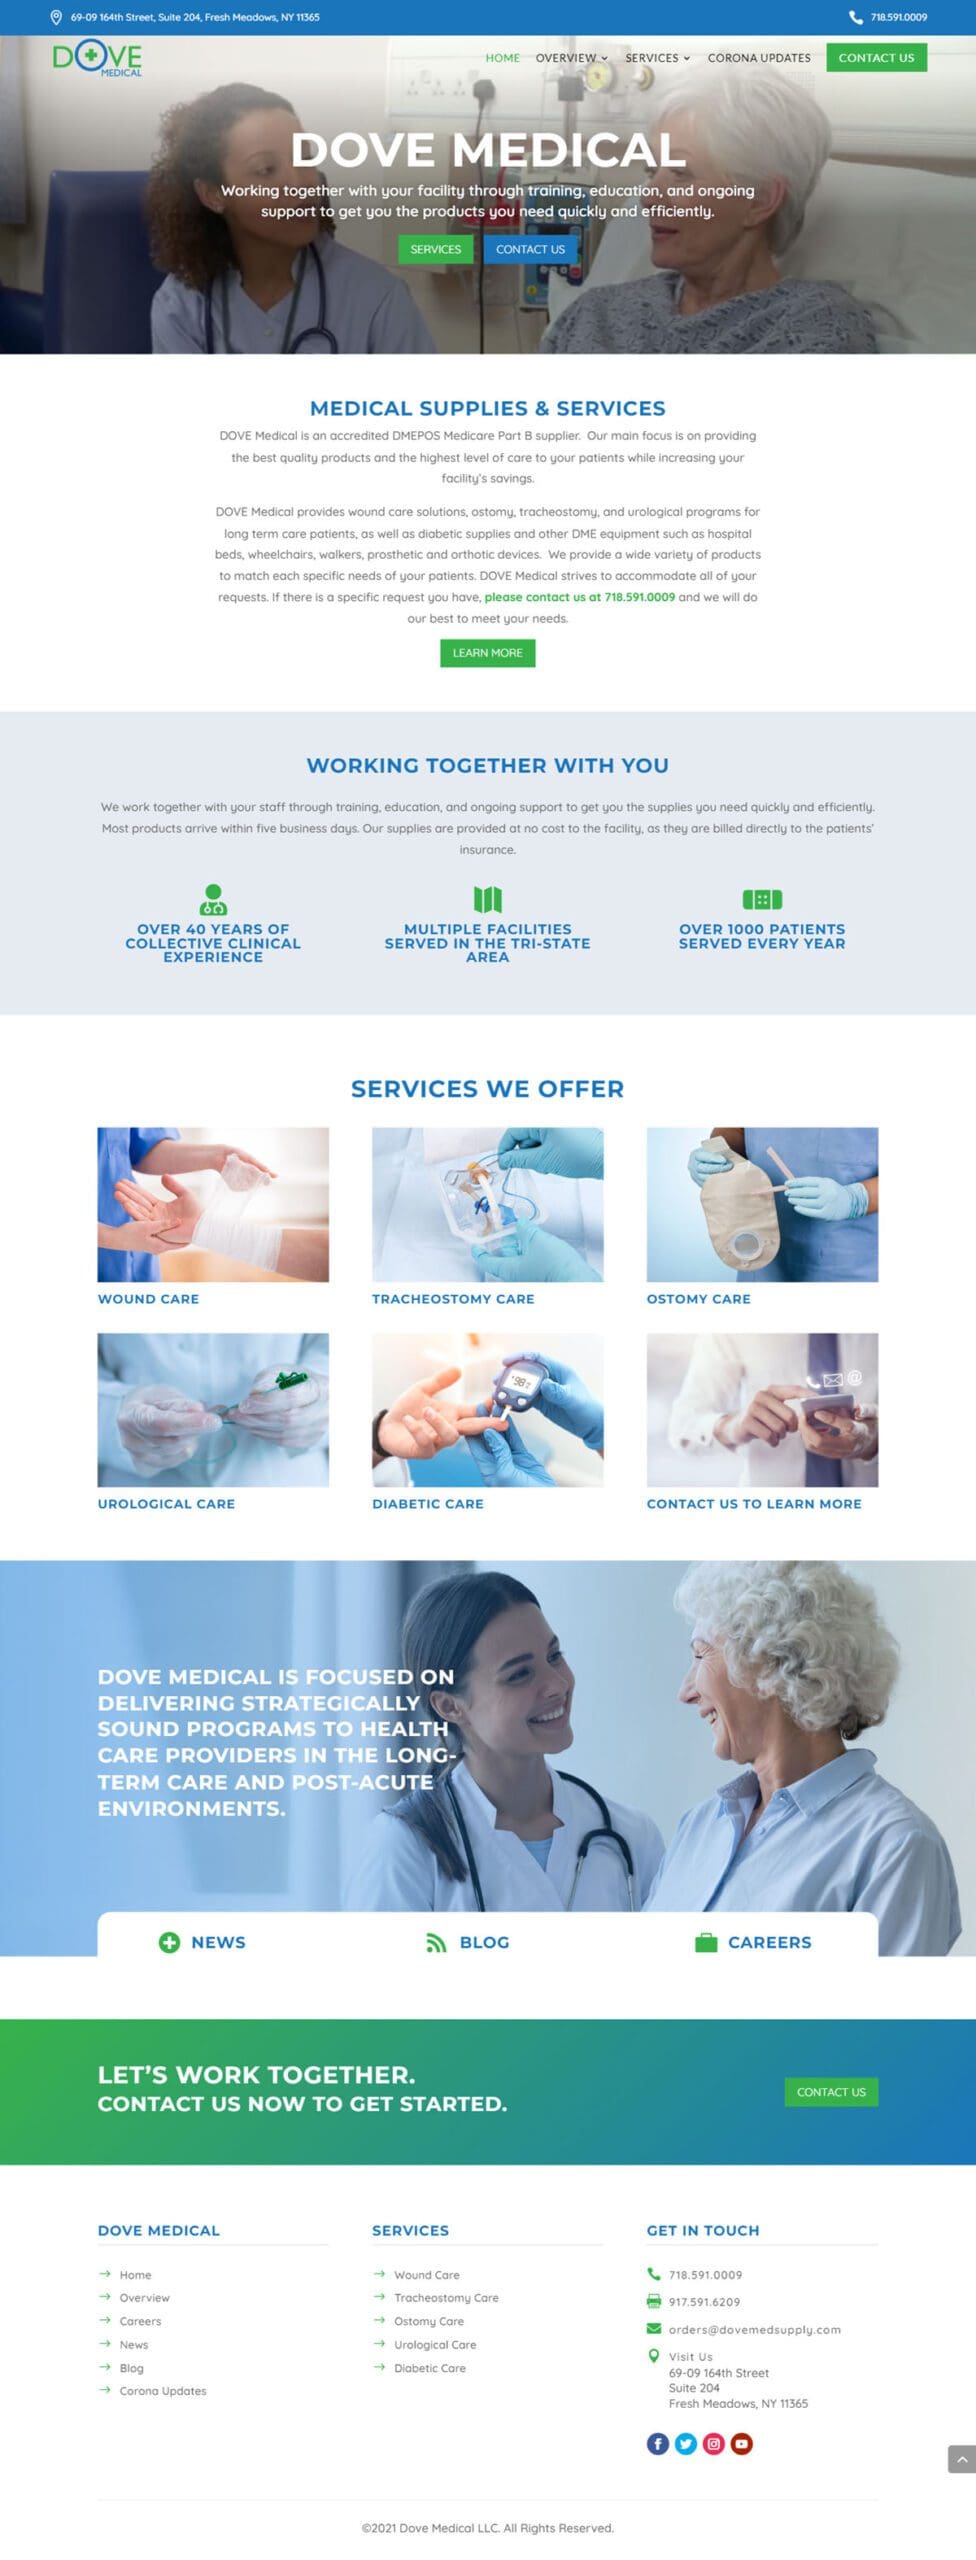 Medical Supplies & Services Website